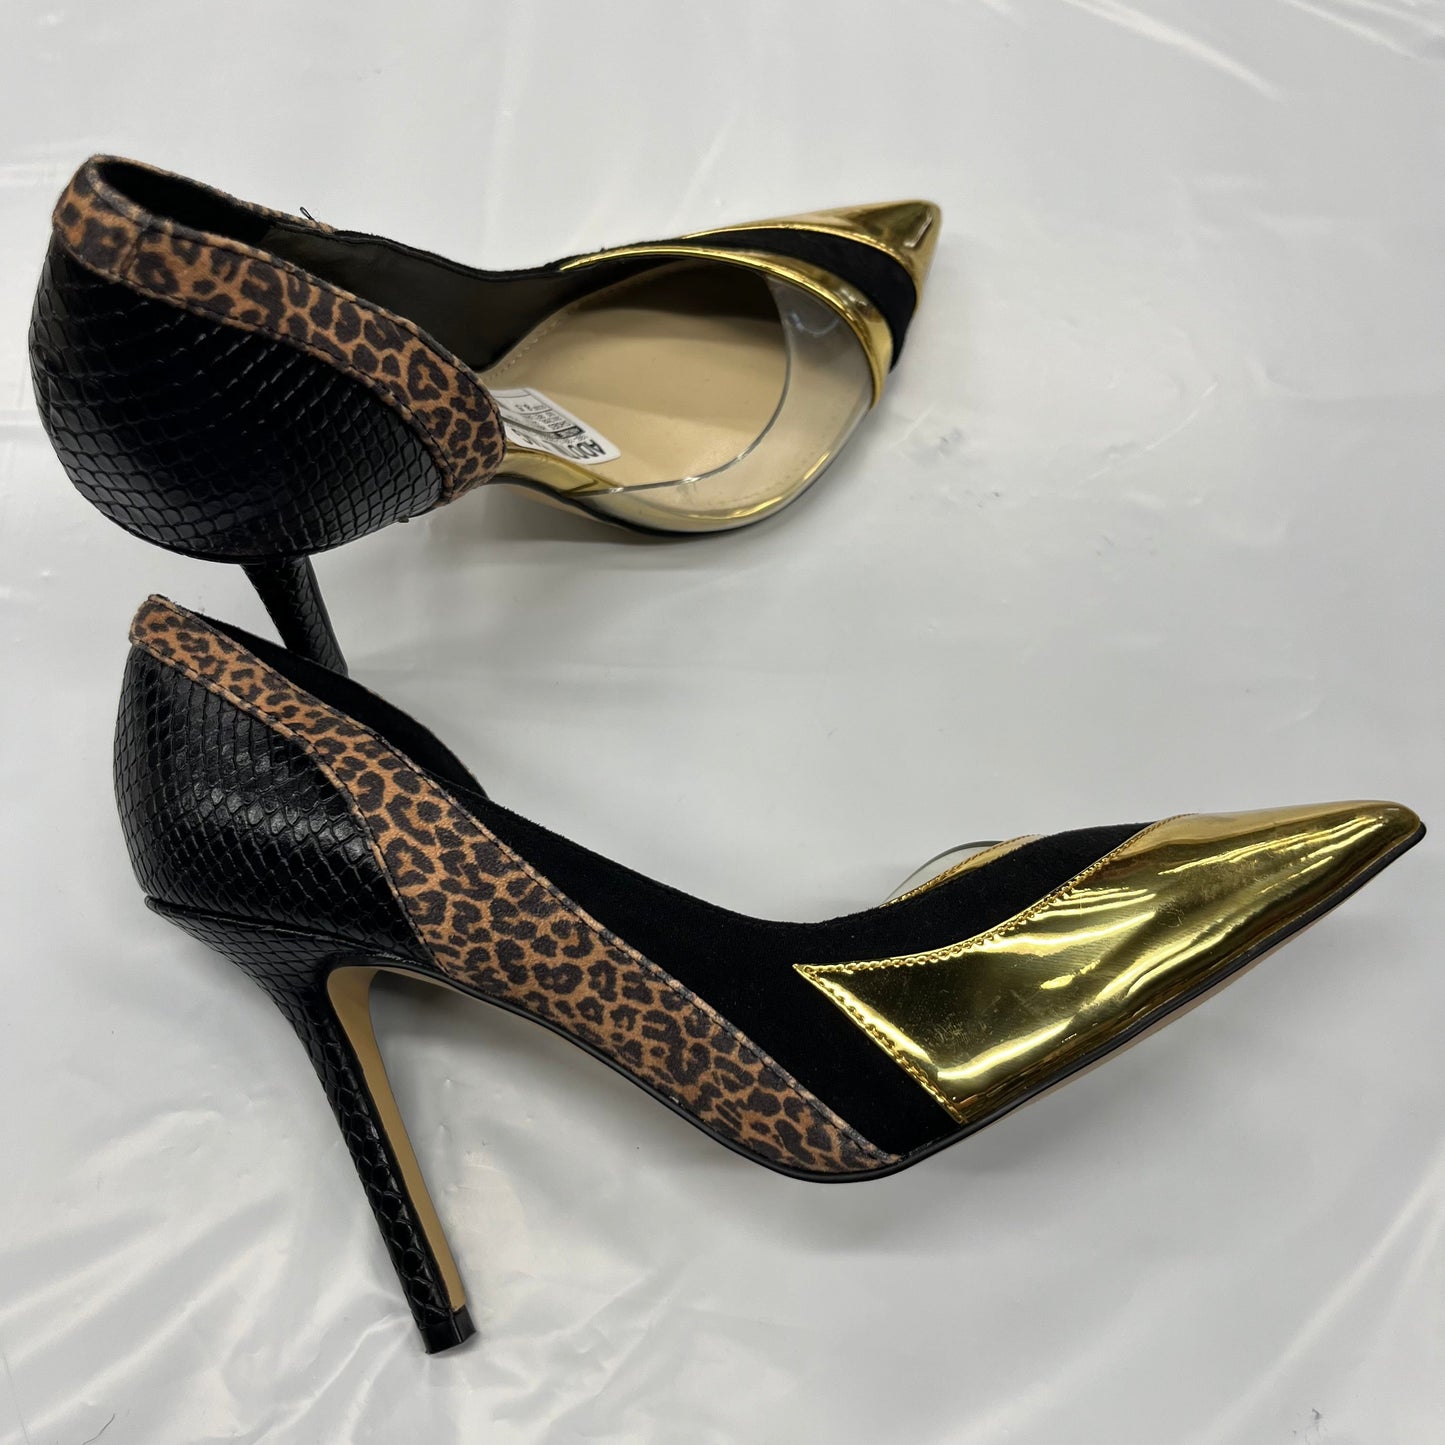 Animal Print Shoes Heels D Orsay Nine West, Size 8.5